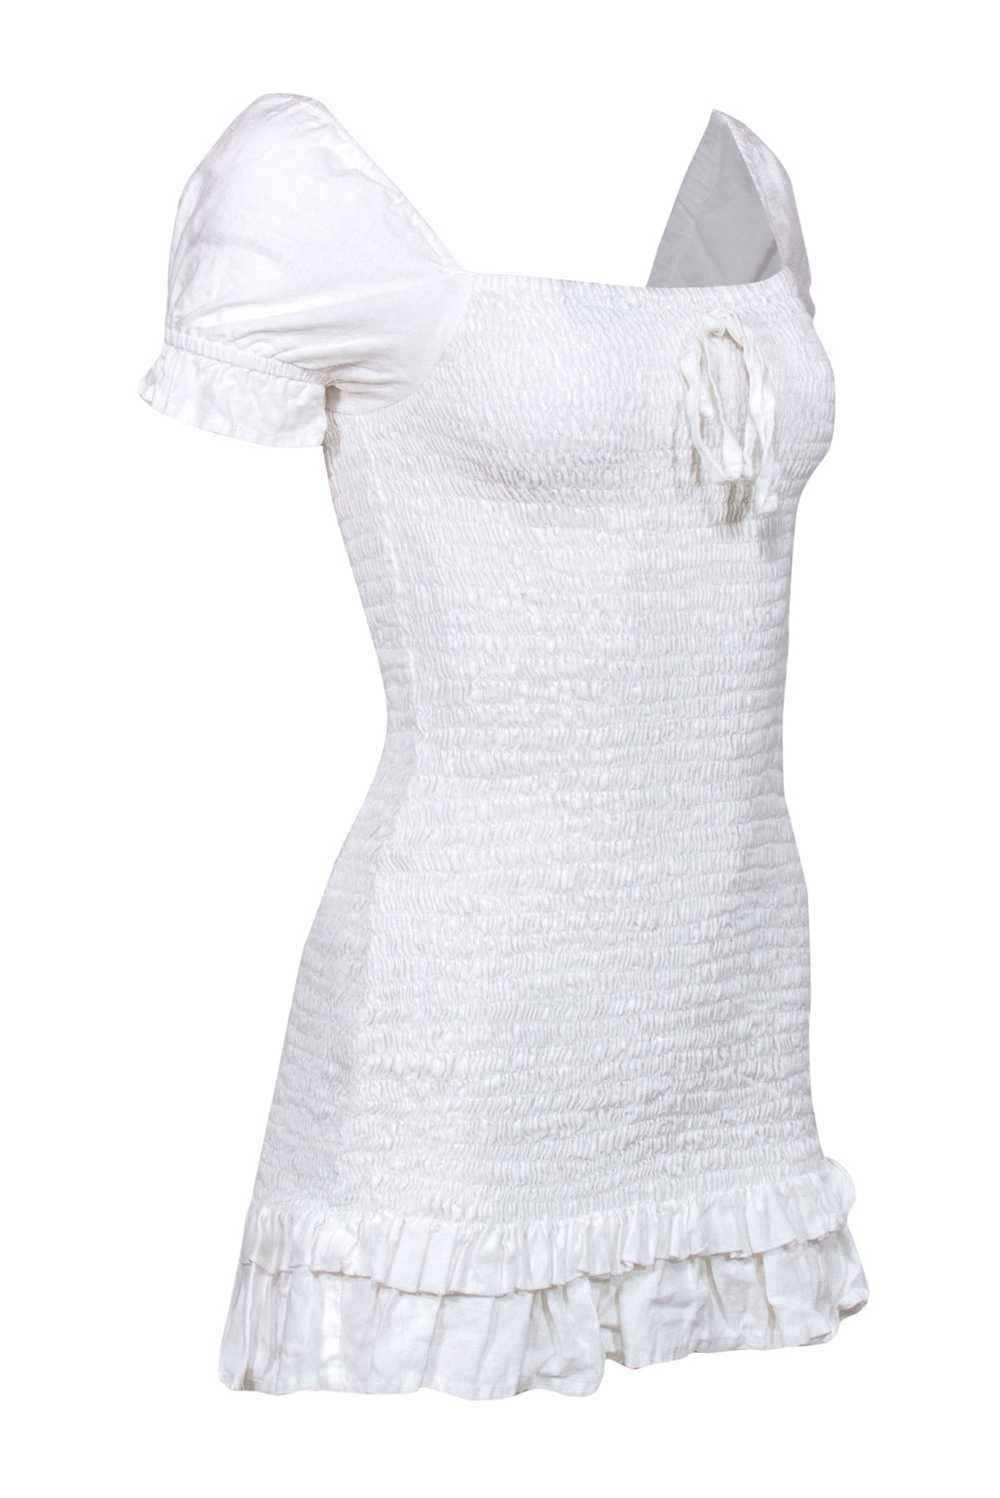 Faithfull the Brand - White Smocked Mini Dress Sz… - image 2